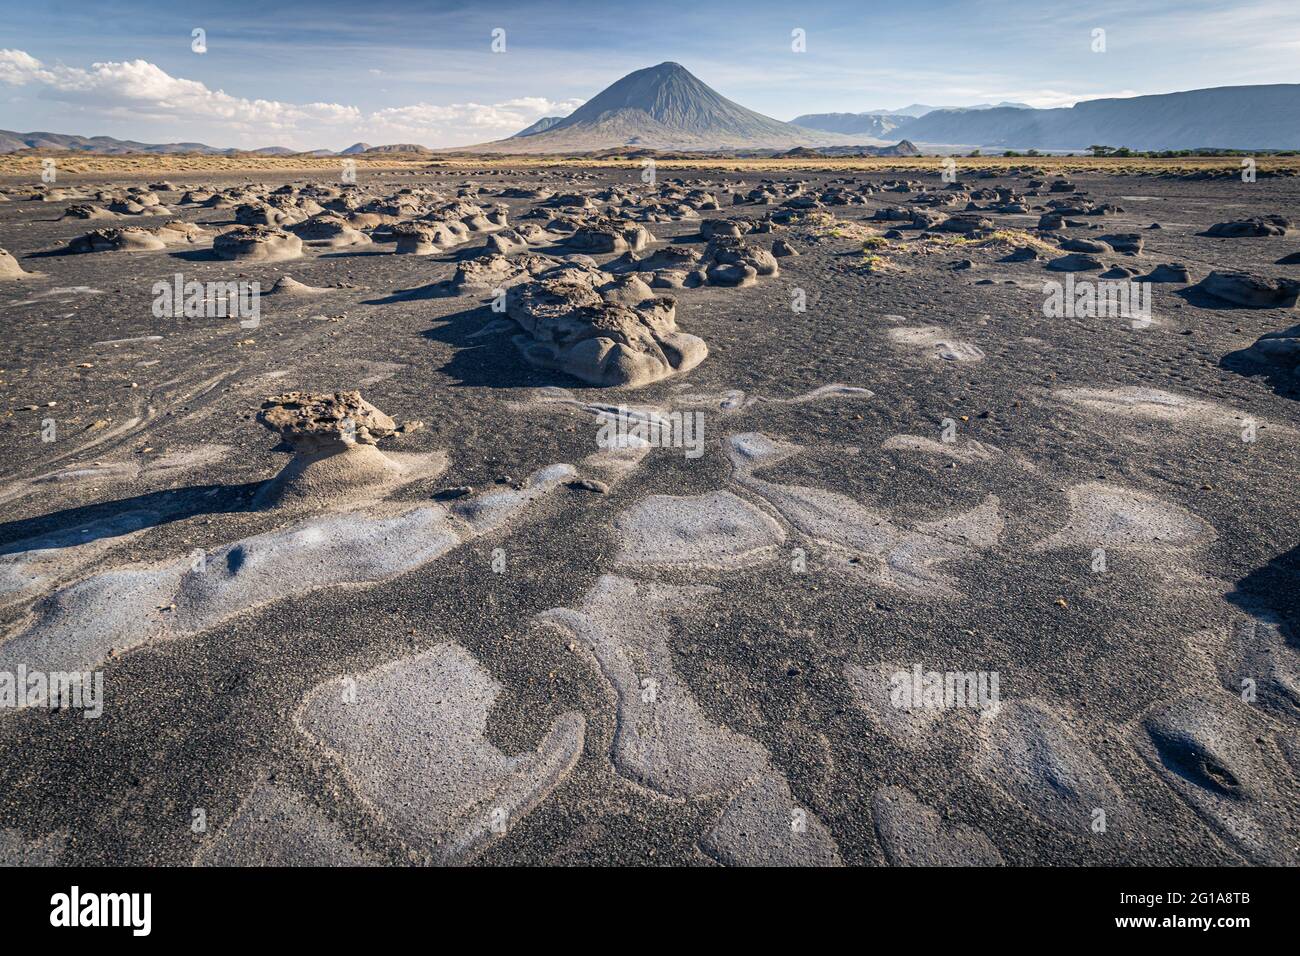 Mudflats close to Lake Natron with Ol Doinyo Lengai volcano in the background; Tanzania Stock Photo